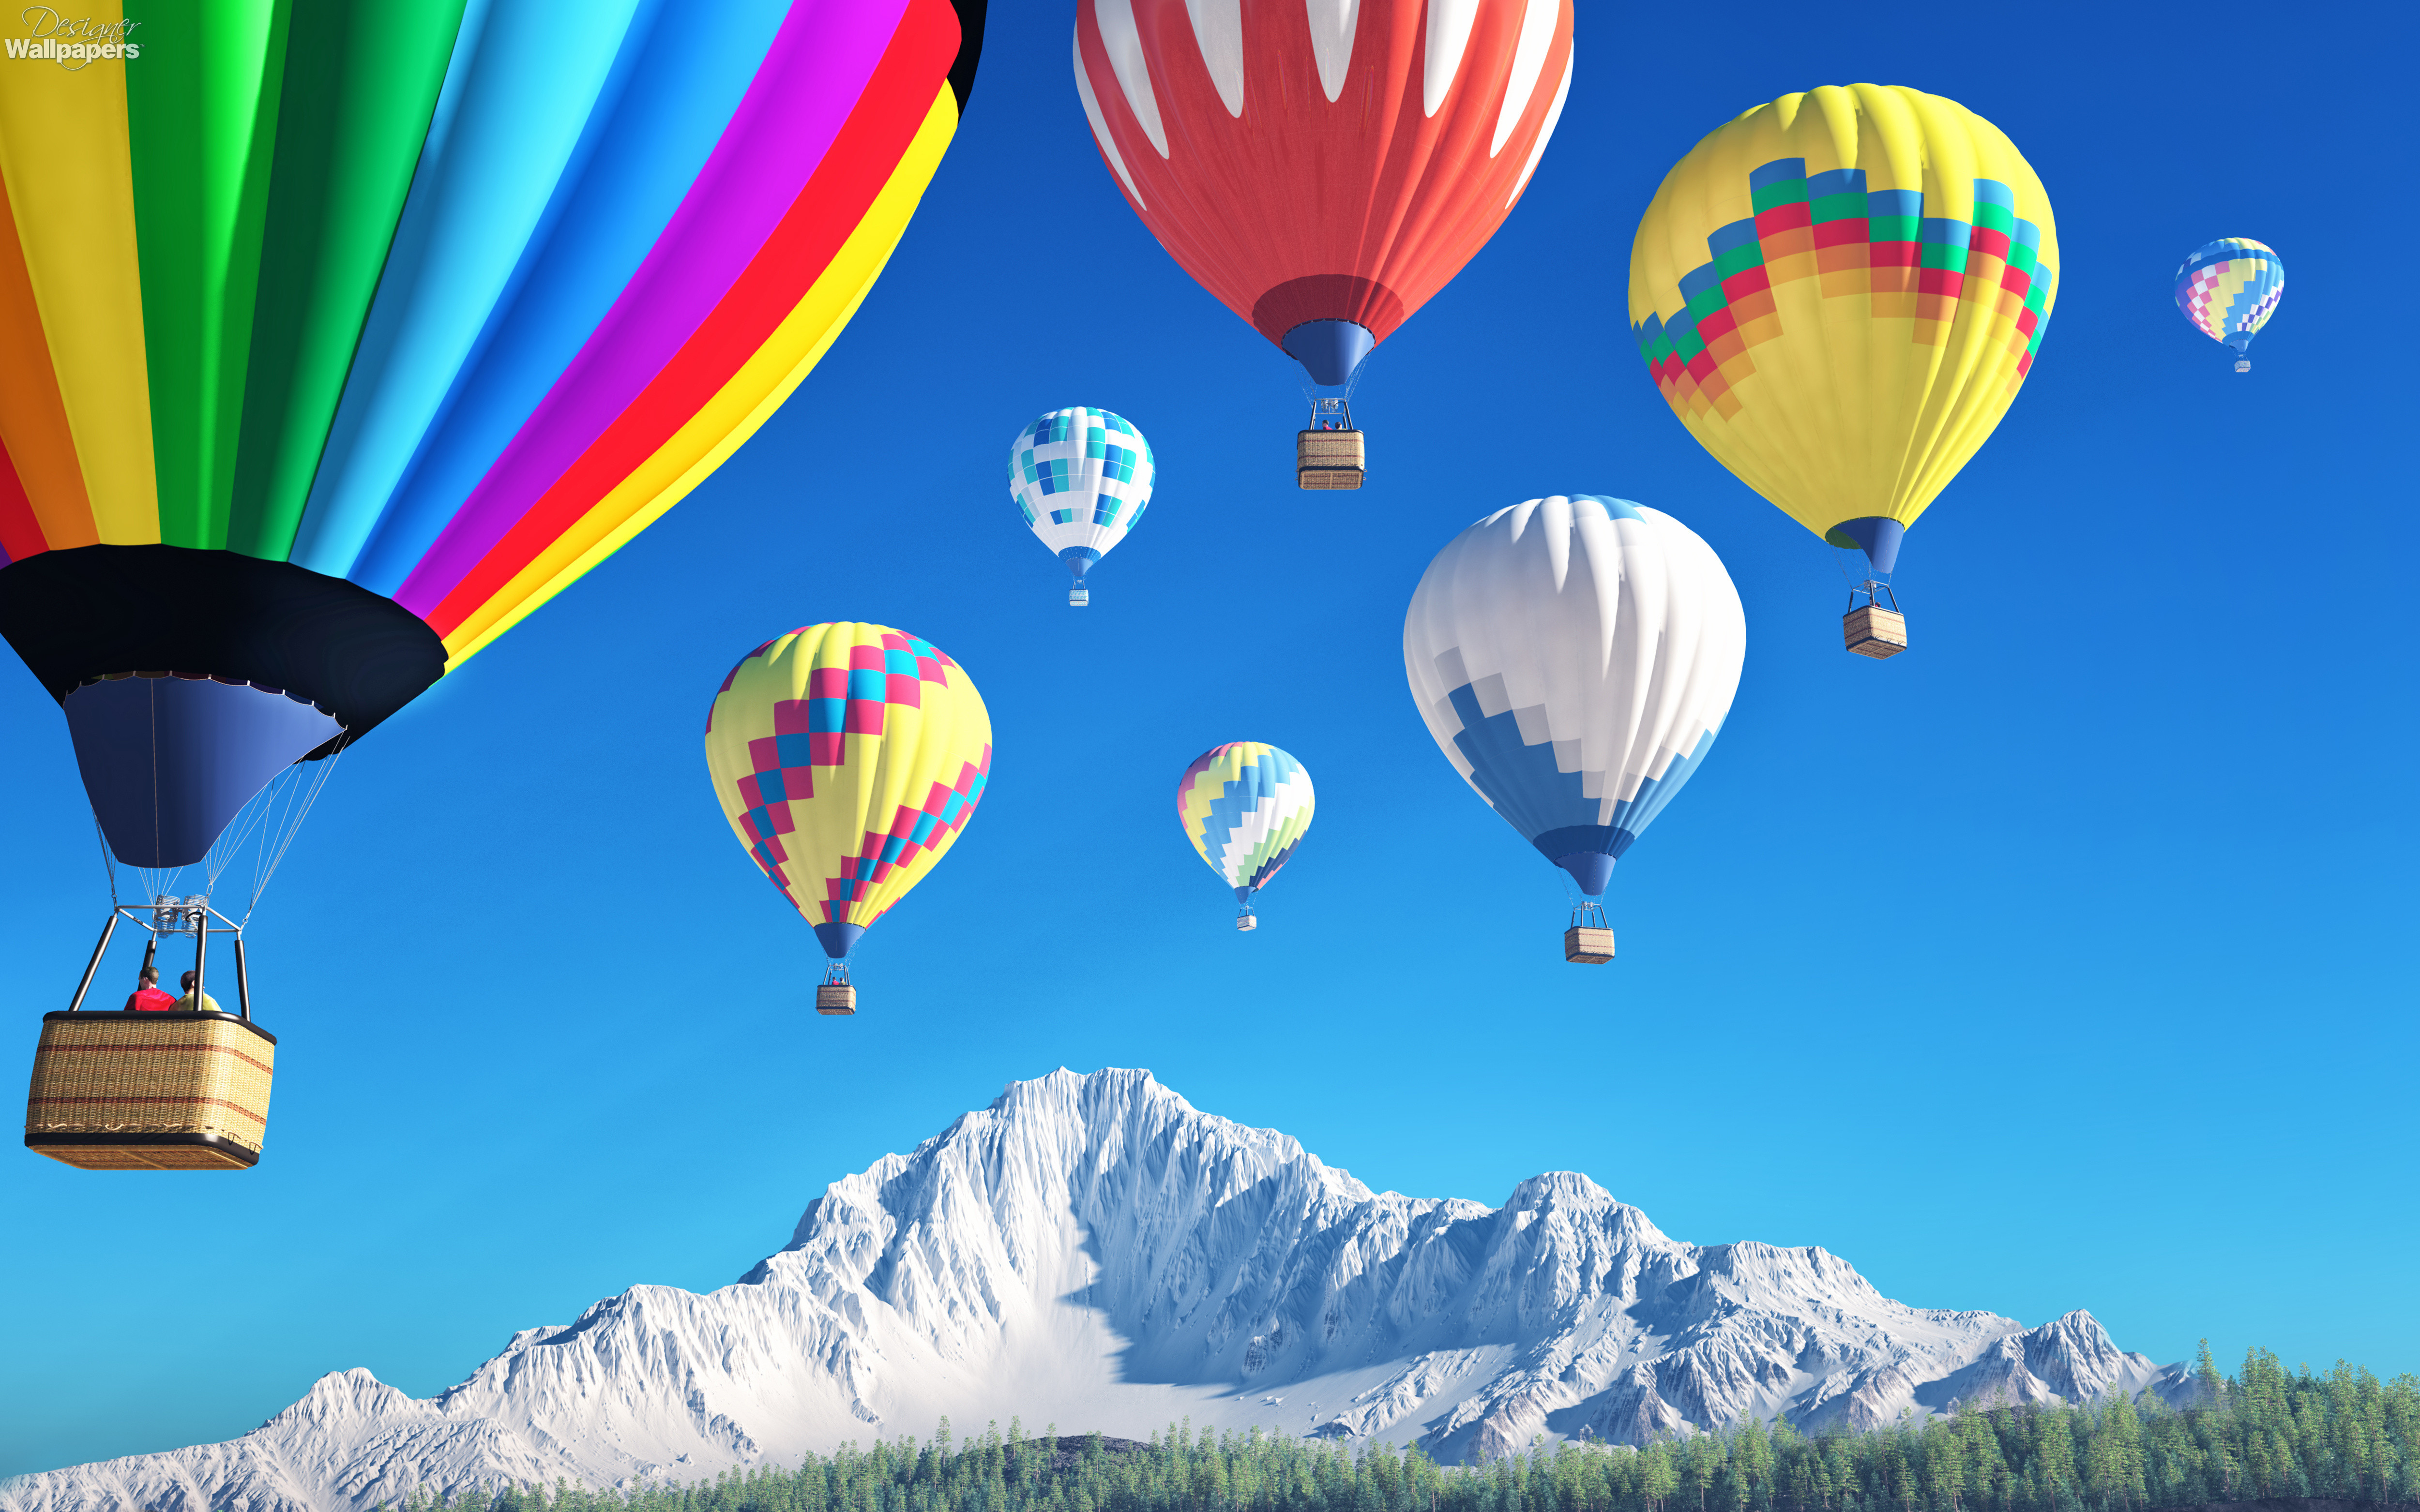 colorful hot air balloon wallpaper